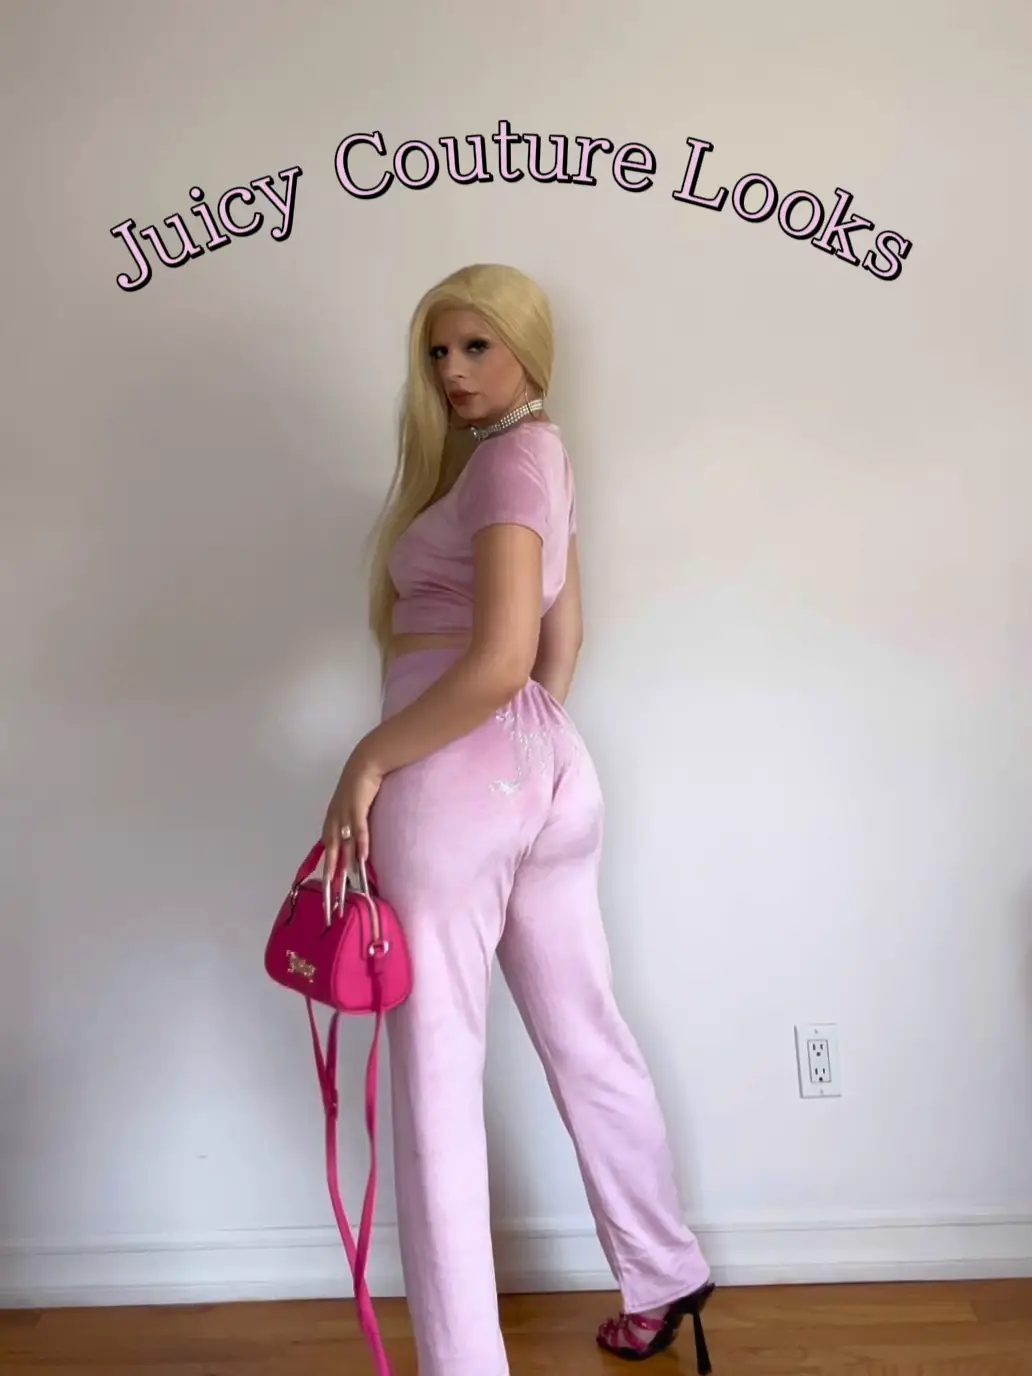 Juicy Couture, Pants & Jumpsuits, Nwt Juicy Couture Sport Velvet Stripe  Leggings Size Large